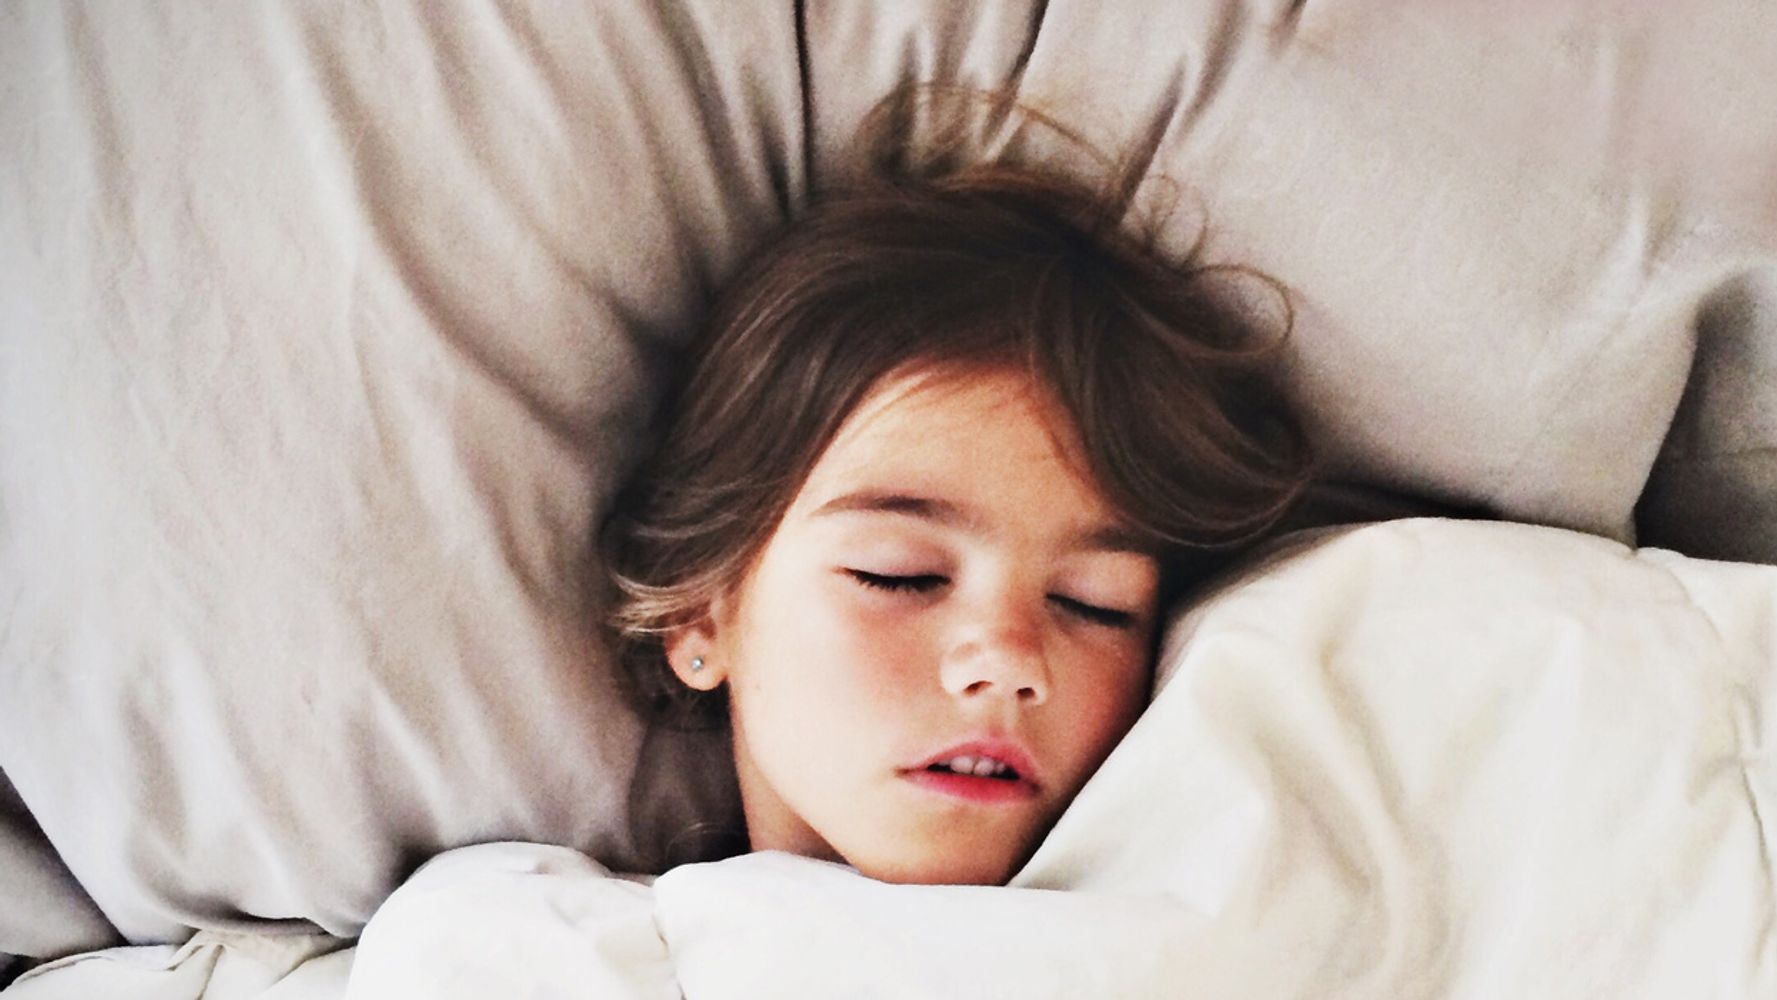 Sleep on dear little child. Kids Sleep time кровати. Ребенок храпит. Как спят дети. Раннее утро детство.